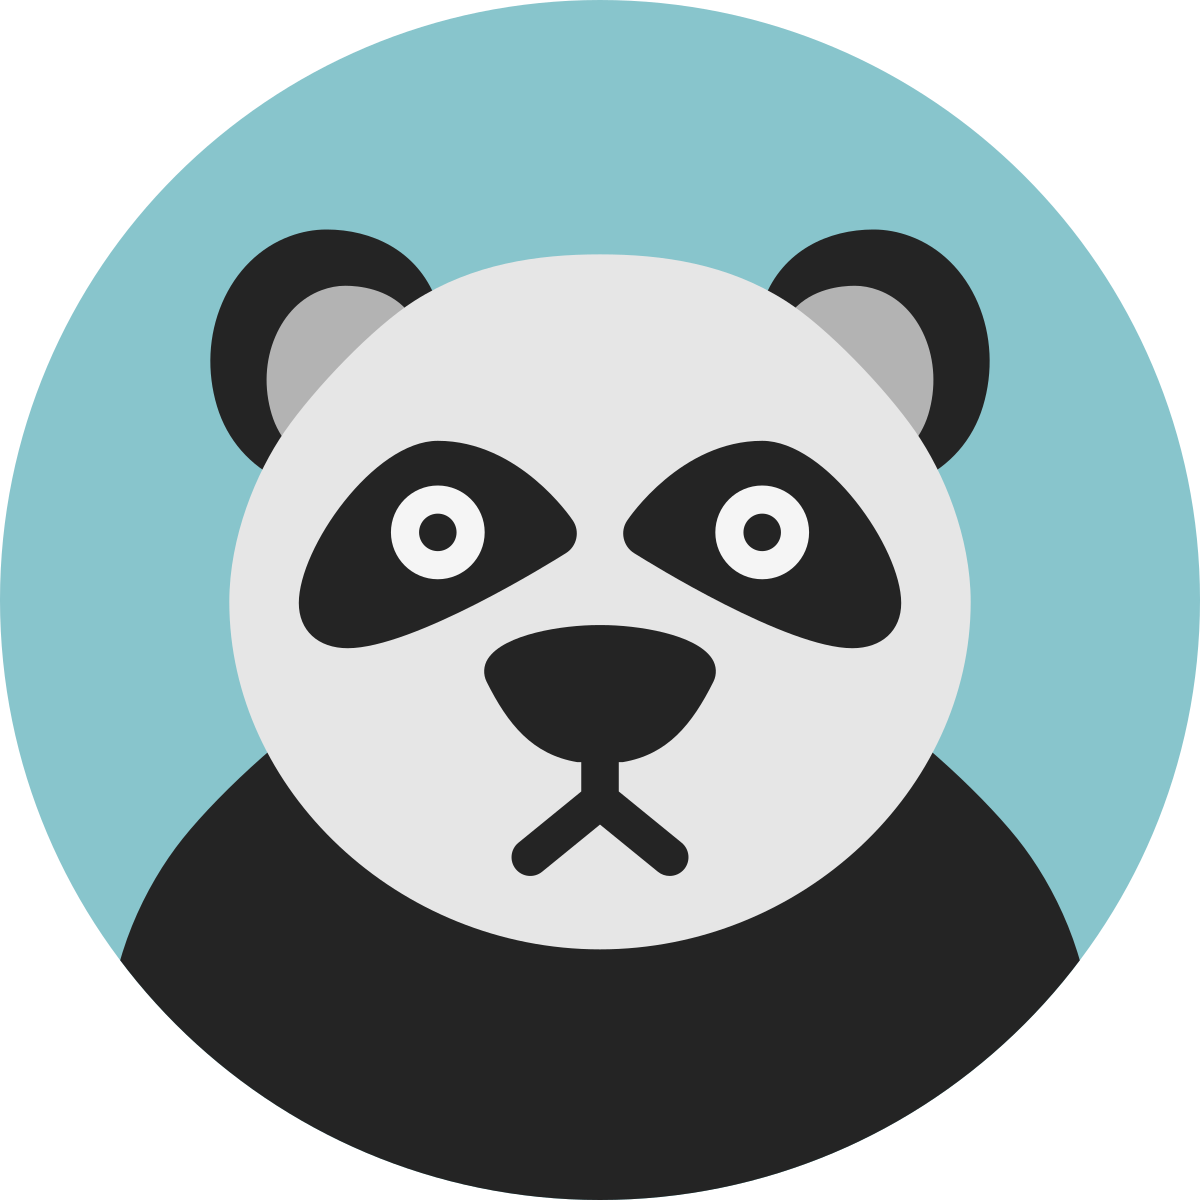 Download File:Creative-Tail-Animal-panda.svg - Wikimedia Commons